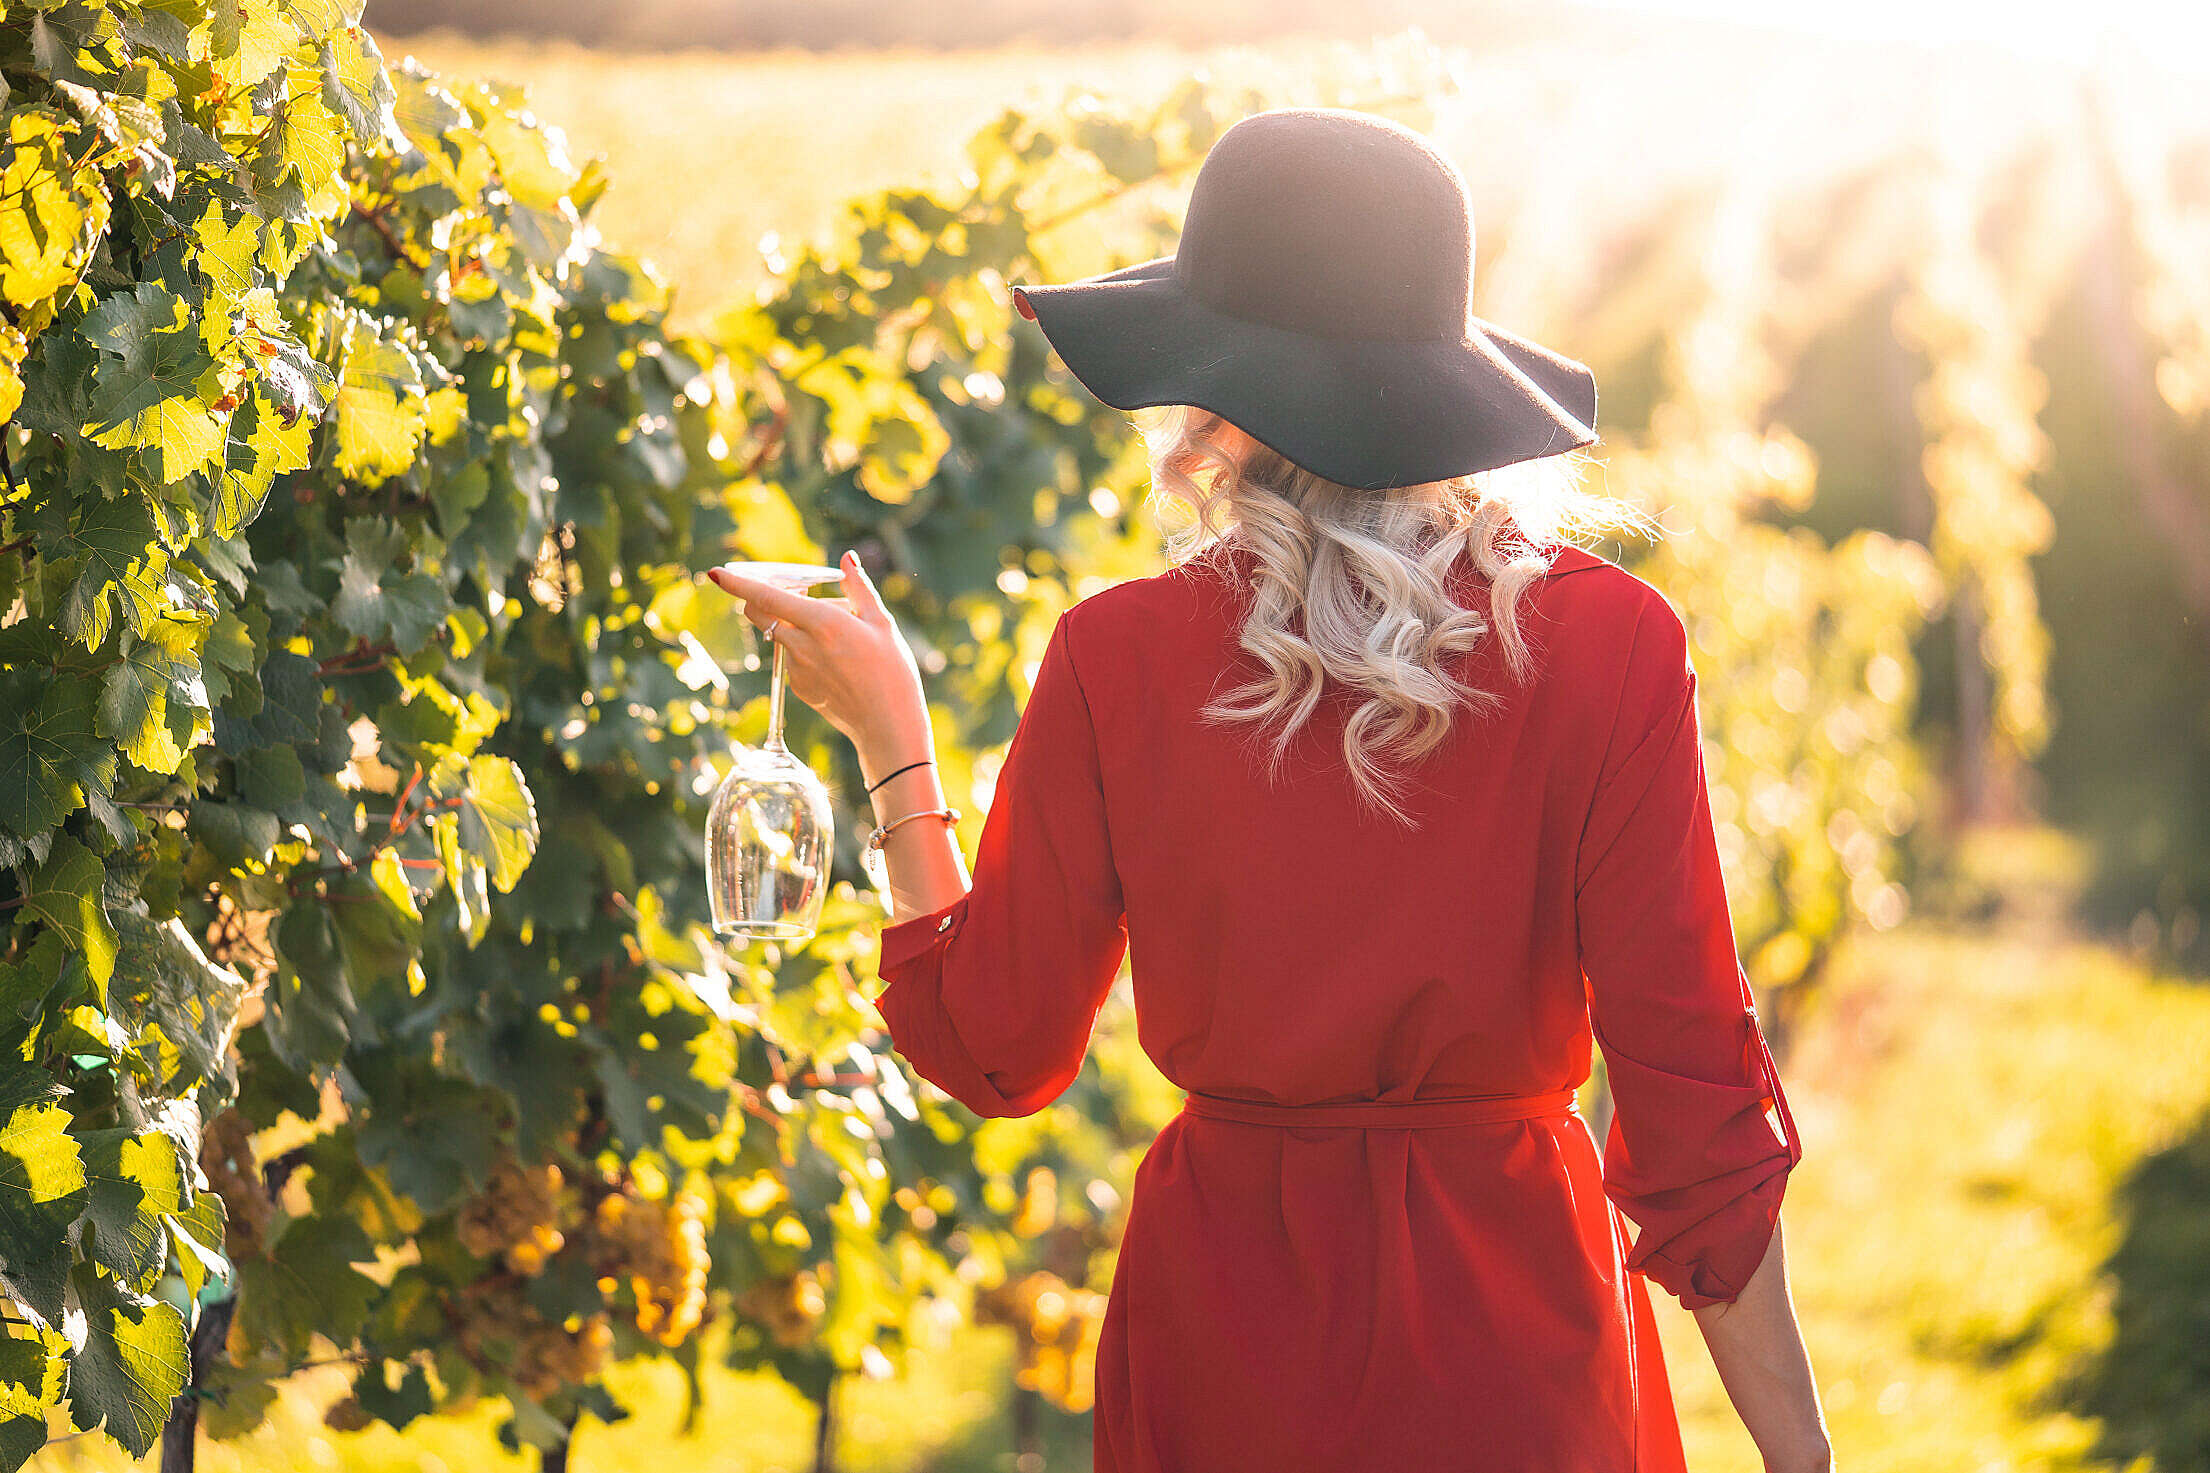 Woman in Red Dress Walking Through the Vineyard Free Stock Photo